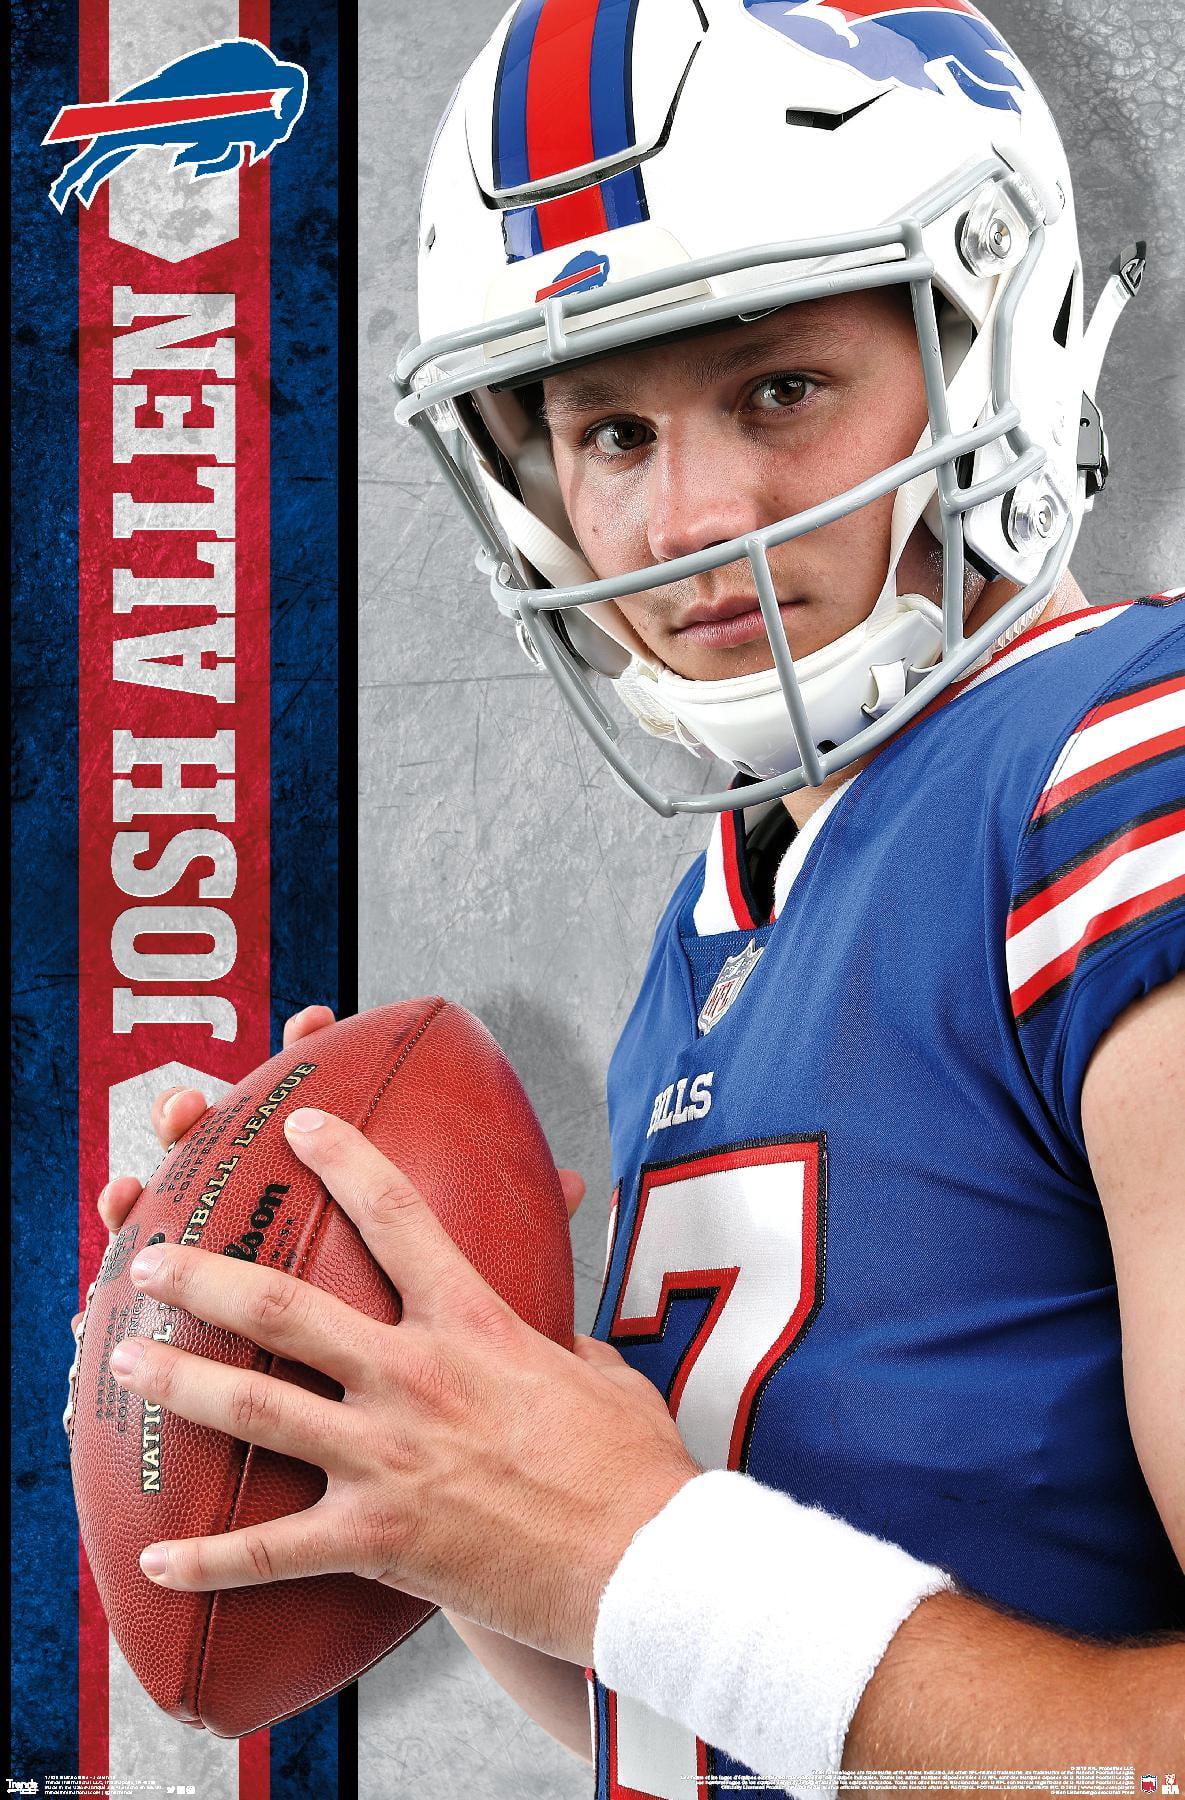 NFL Buffalo Bills - Josh Allen 18 Wall Poster, 22.375' x 34', Framed 